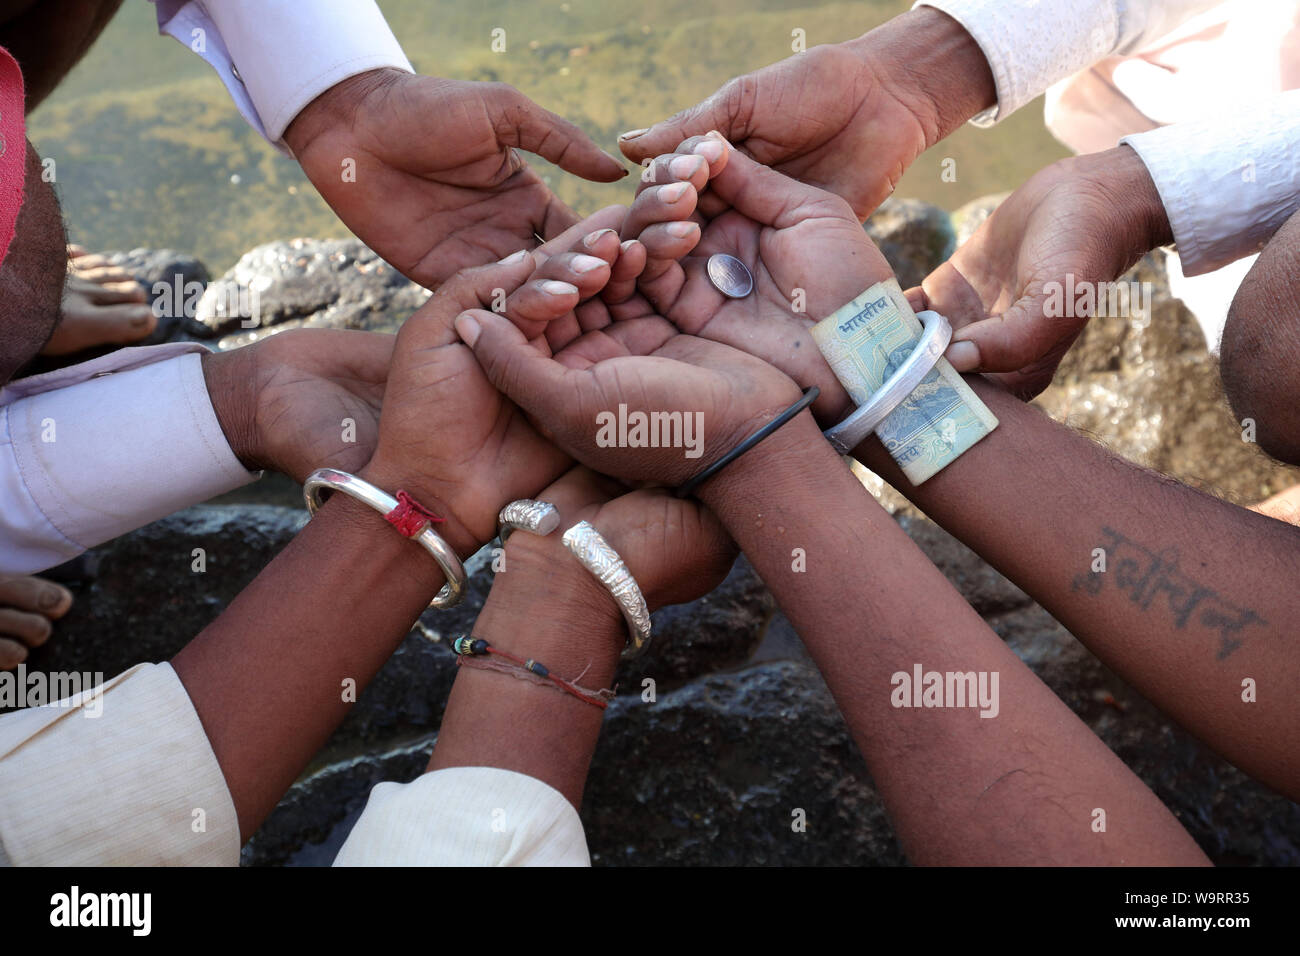 Devoti pellegrini Indù pregare sul ghats del fiume sacro Narmada in Maheshwar, India Foto Stock